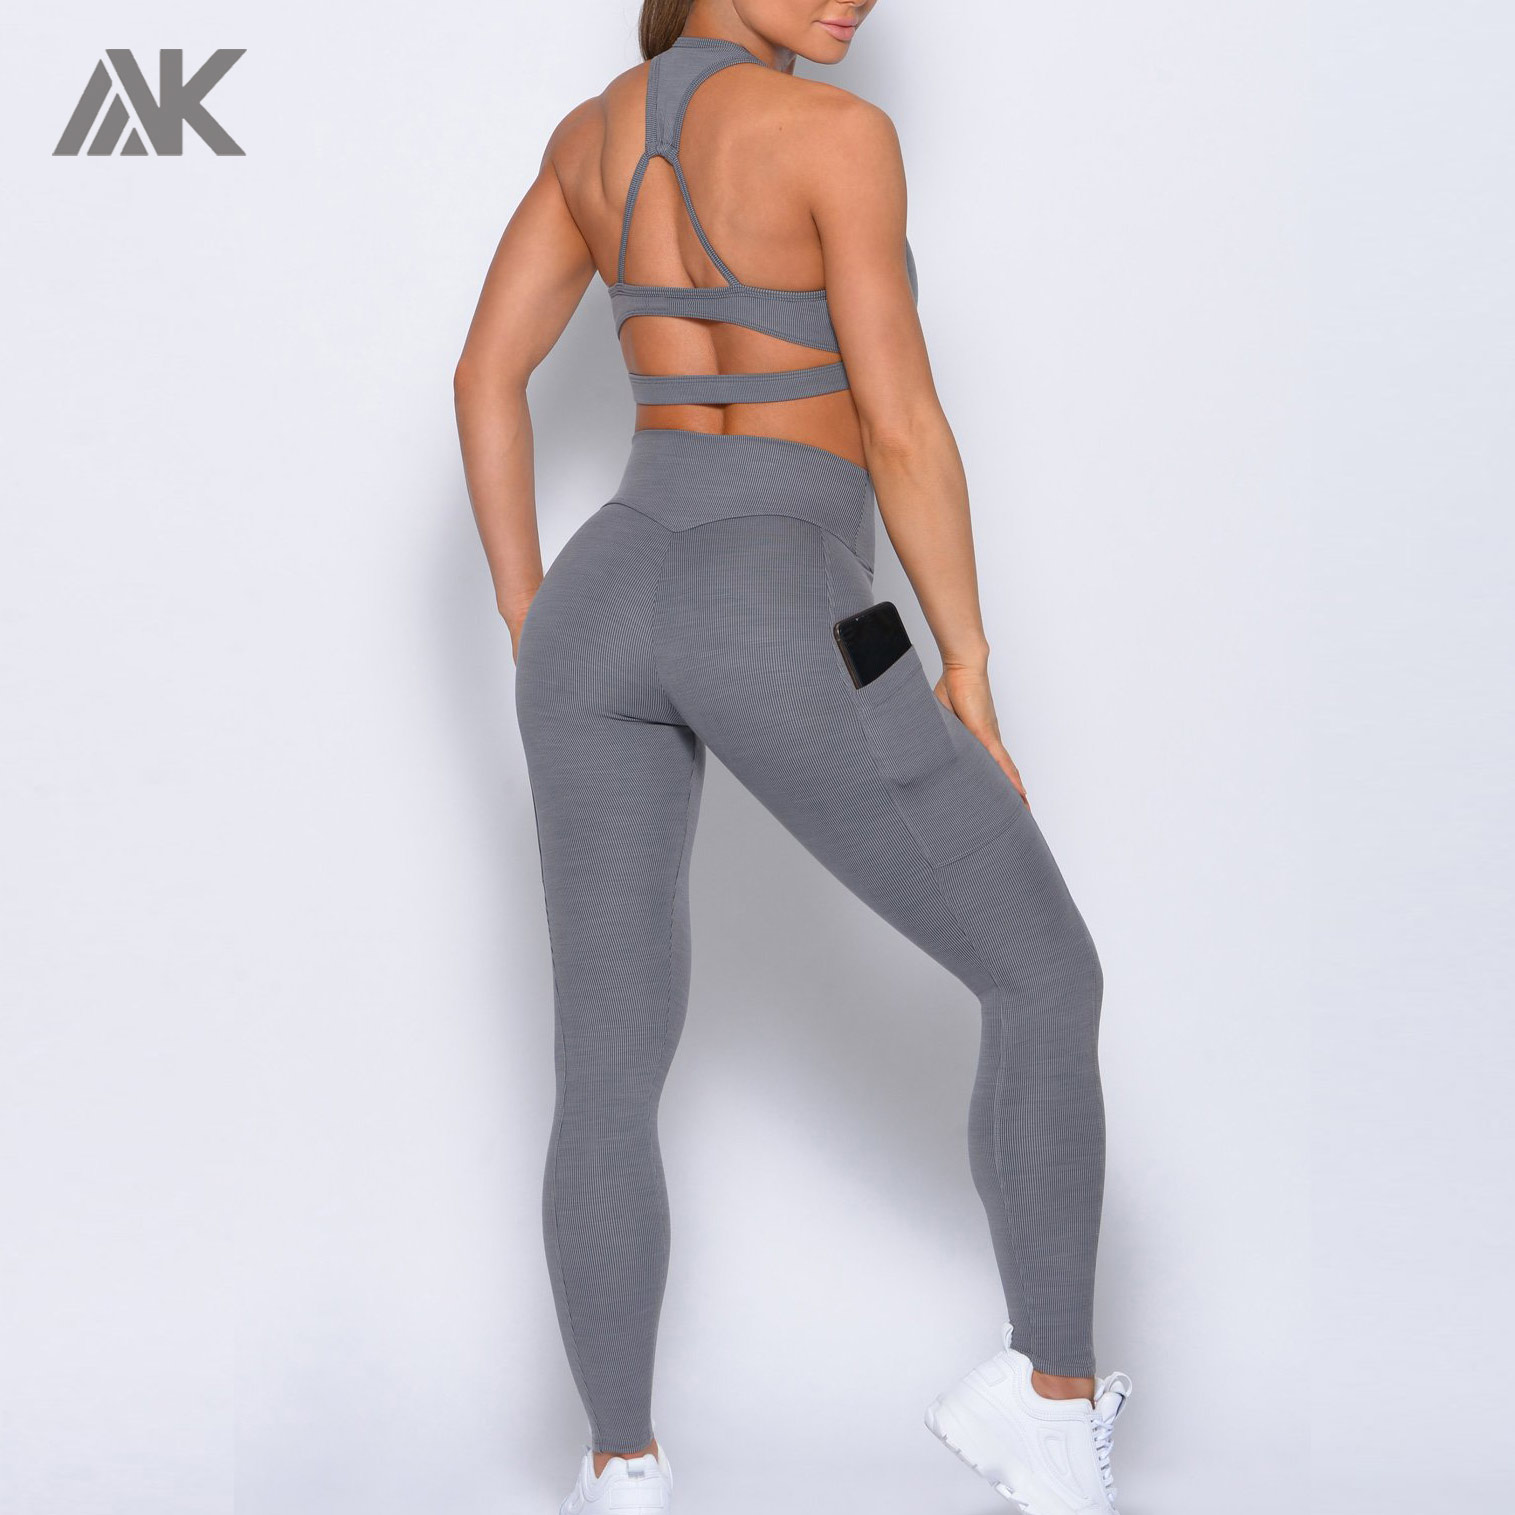 yoga leggings sexy fitness wear women| Alibaba.com